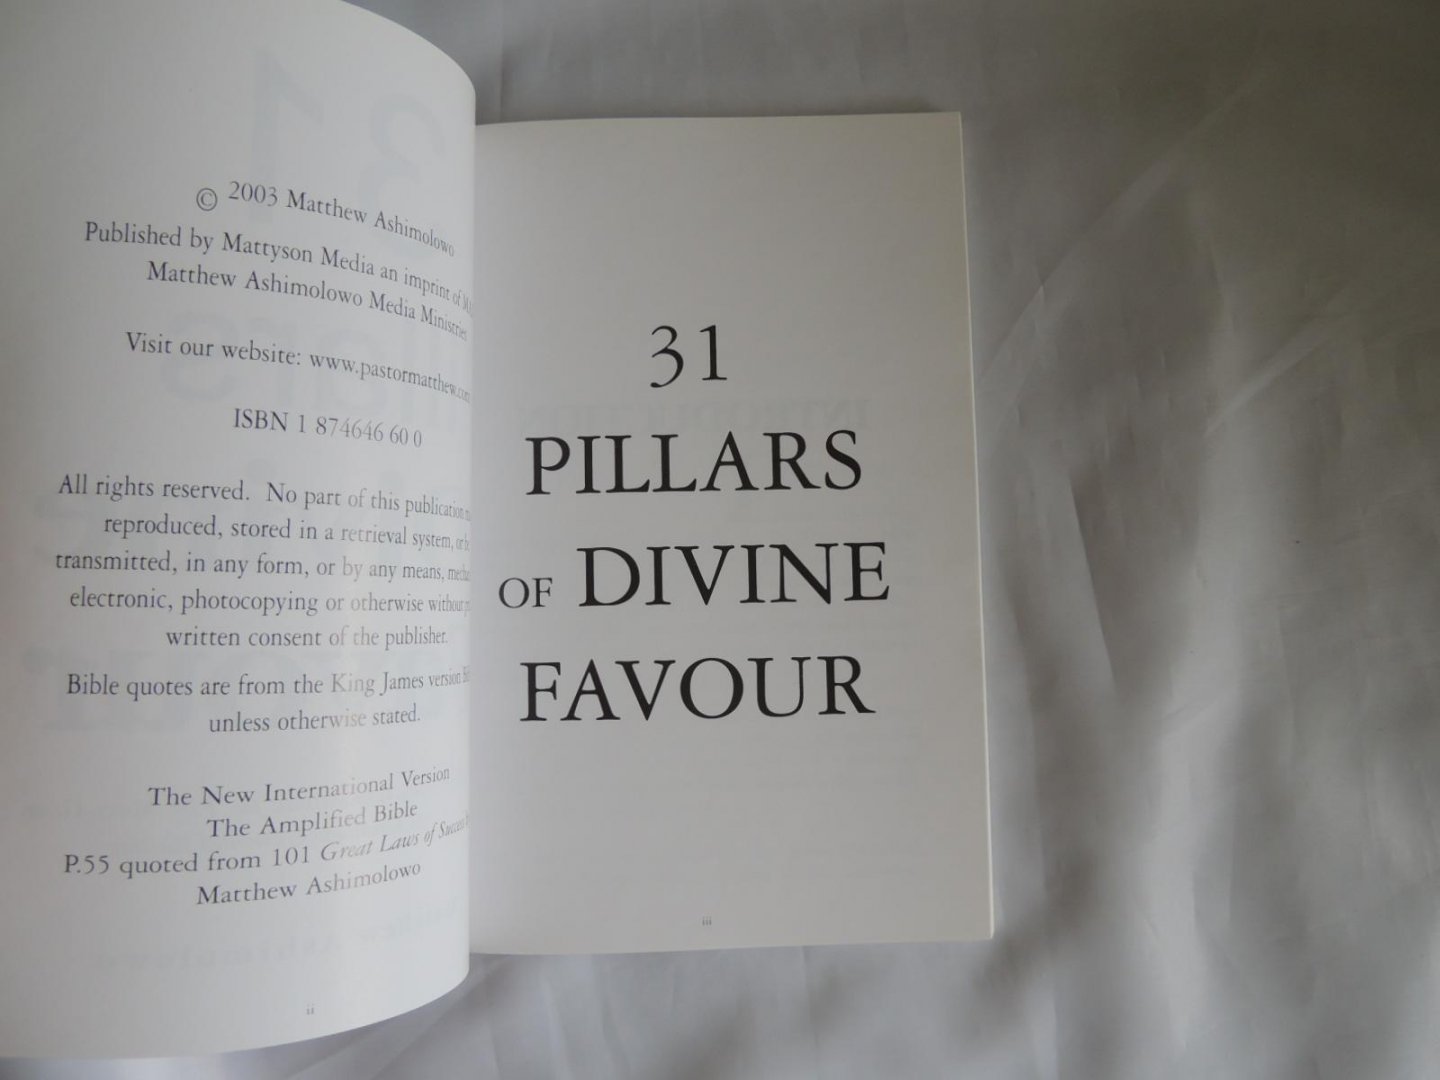 Matthew Ashimolowo - 31 Pillars of Divivne Favour